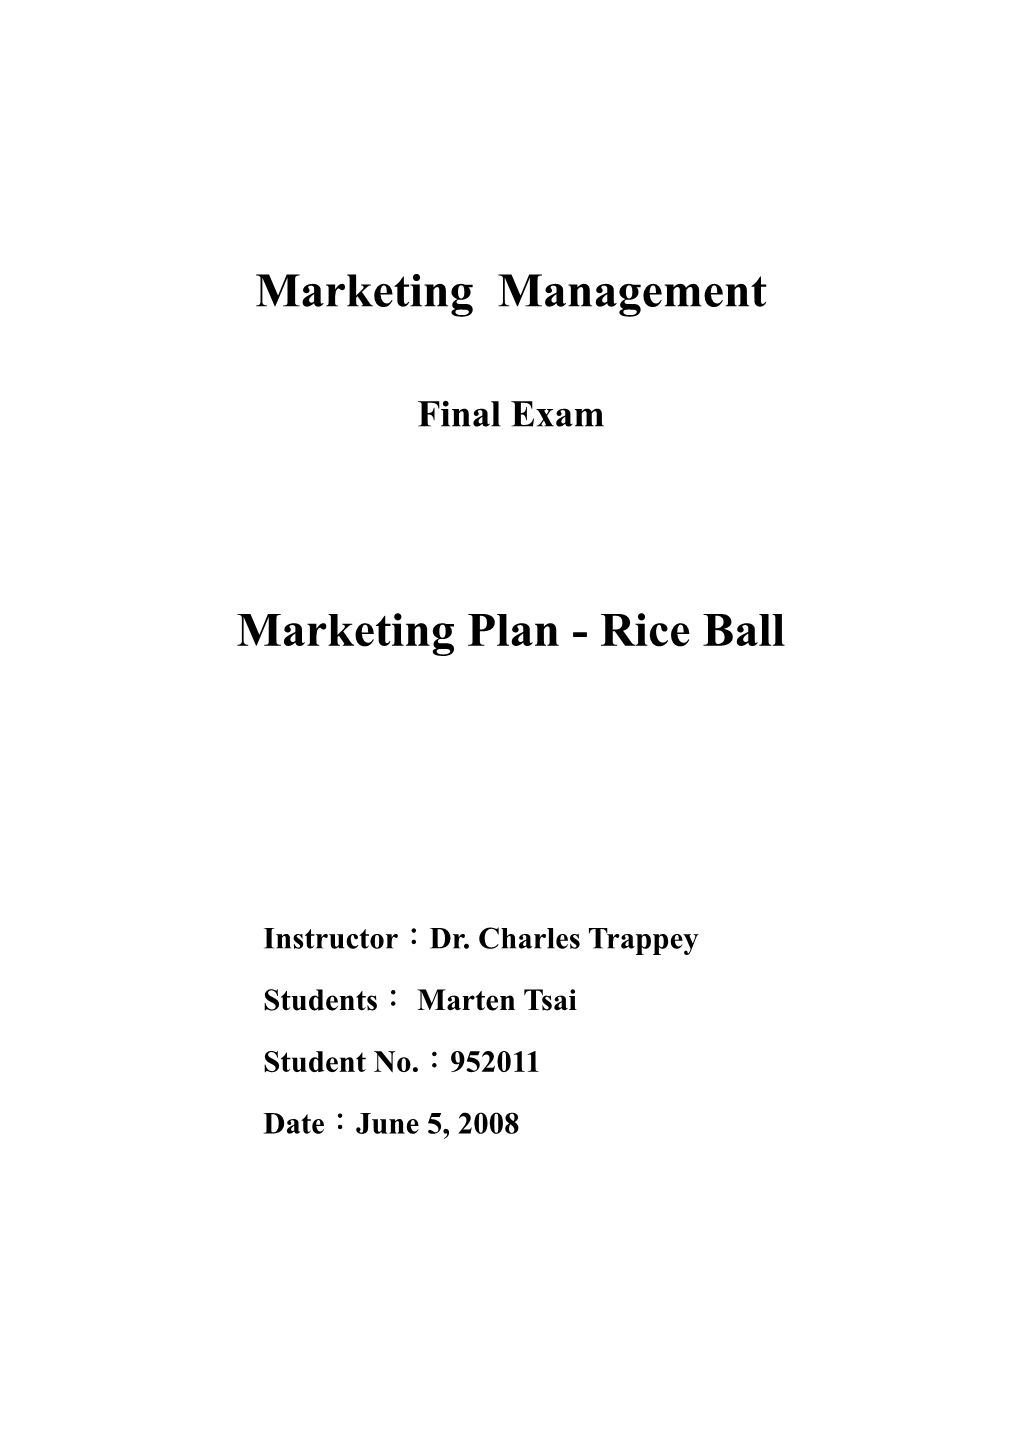 Marketing Plan - Rice Ball